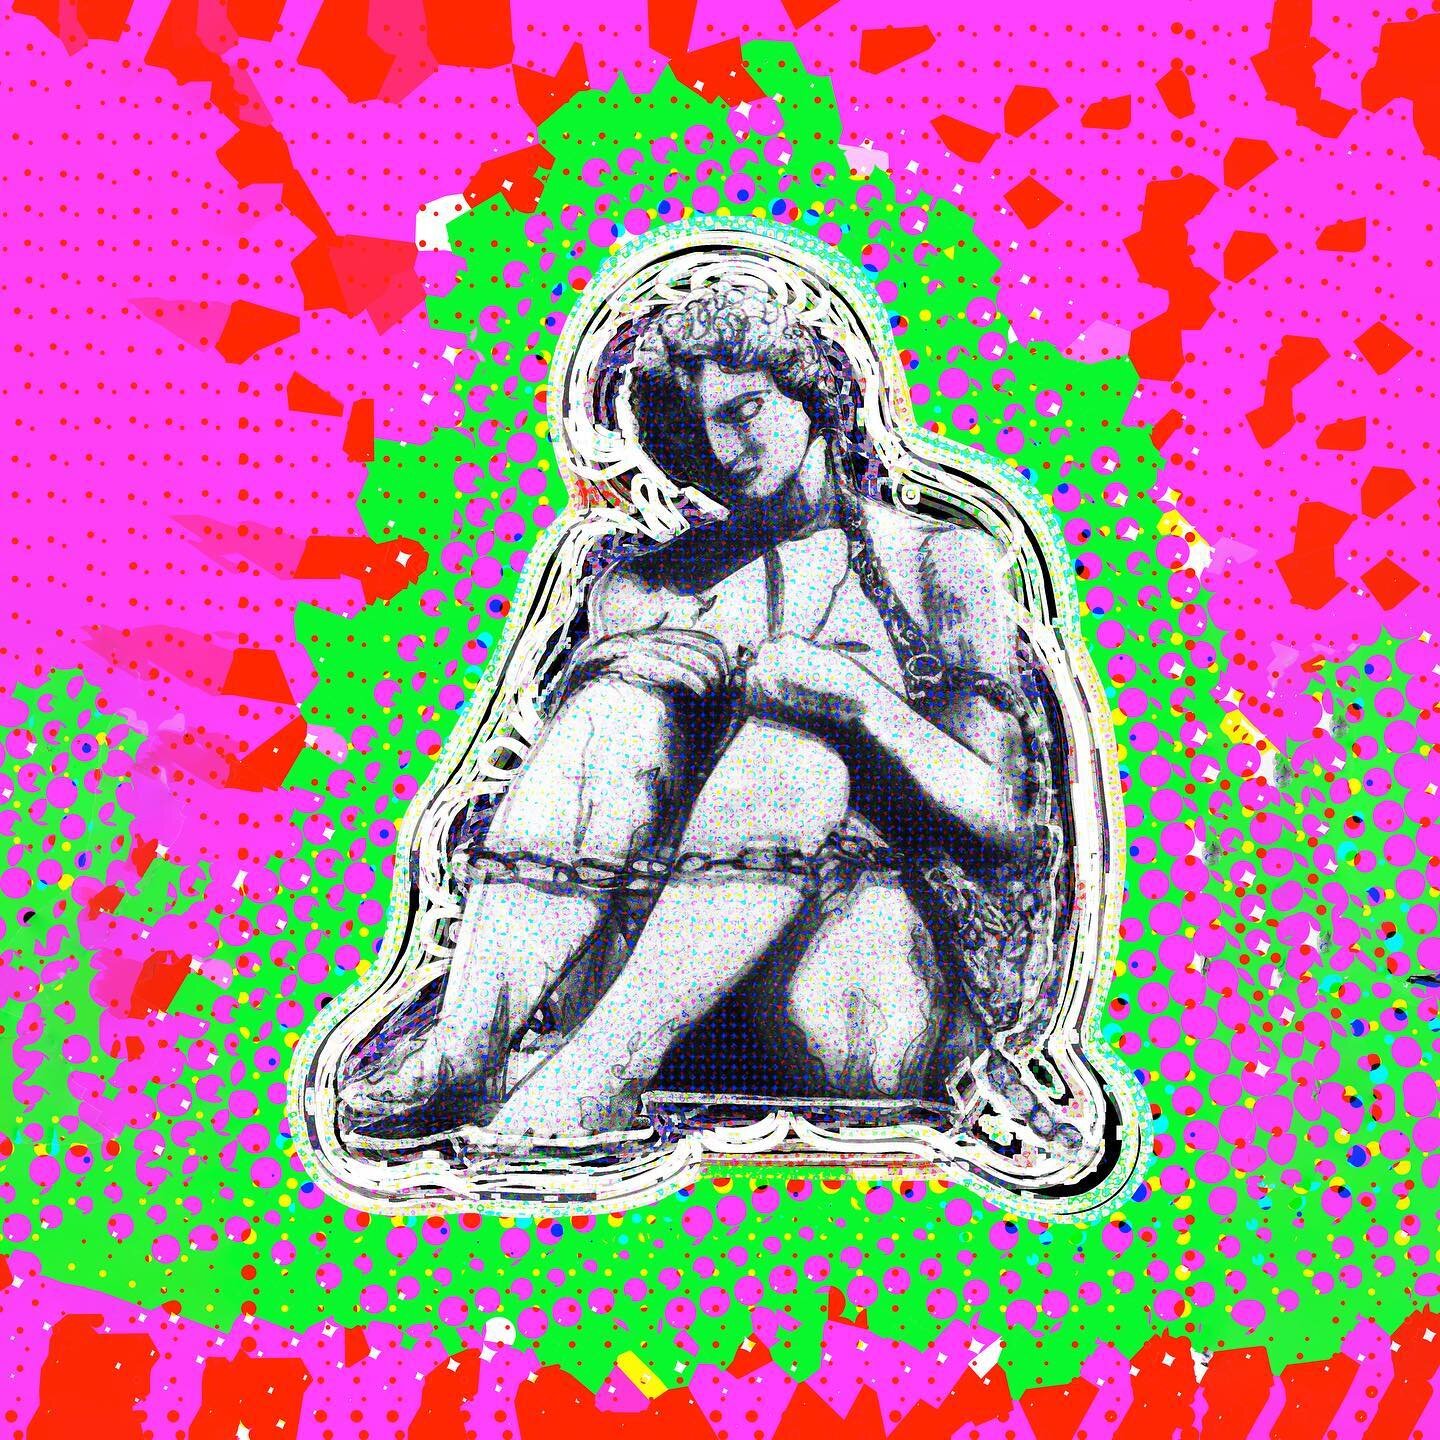 Andromeda (Psychedelic version 1) and QR Poster version #art #contemporaryart #multidisciplinary #neon #andromeda #mythology #rome3000 #pink #green #sculpture #marble